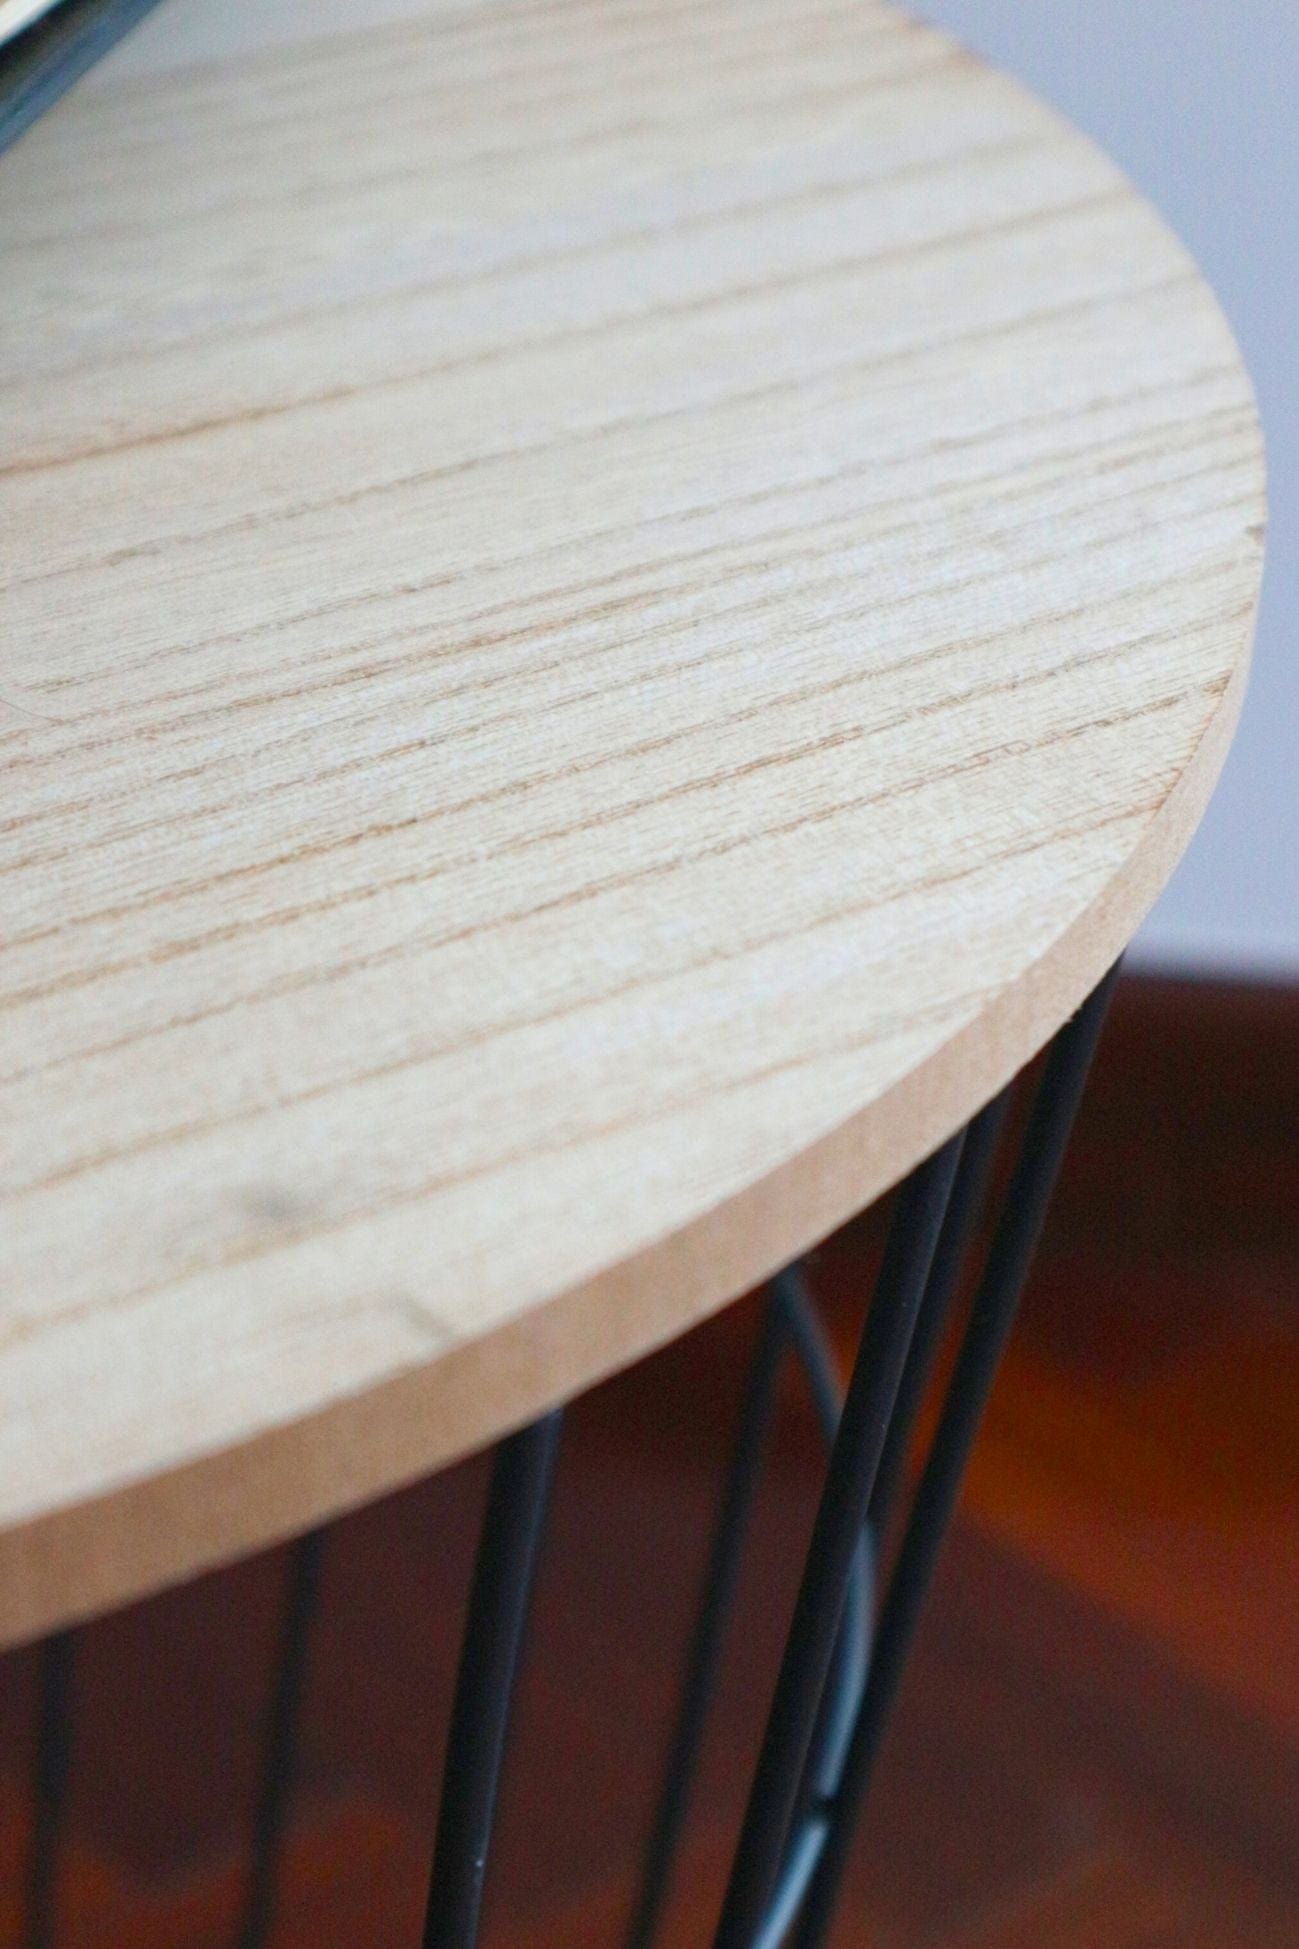 Item International Lissi Lissi - Tavolino in legno e ferro | Item International